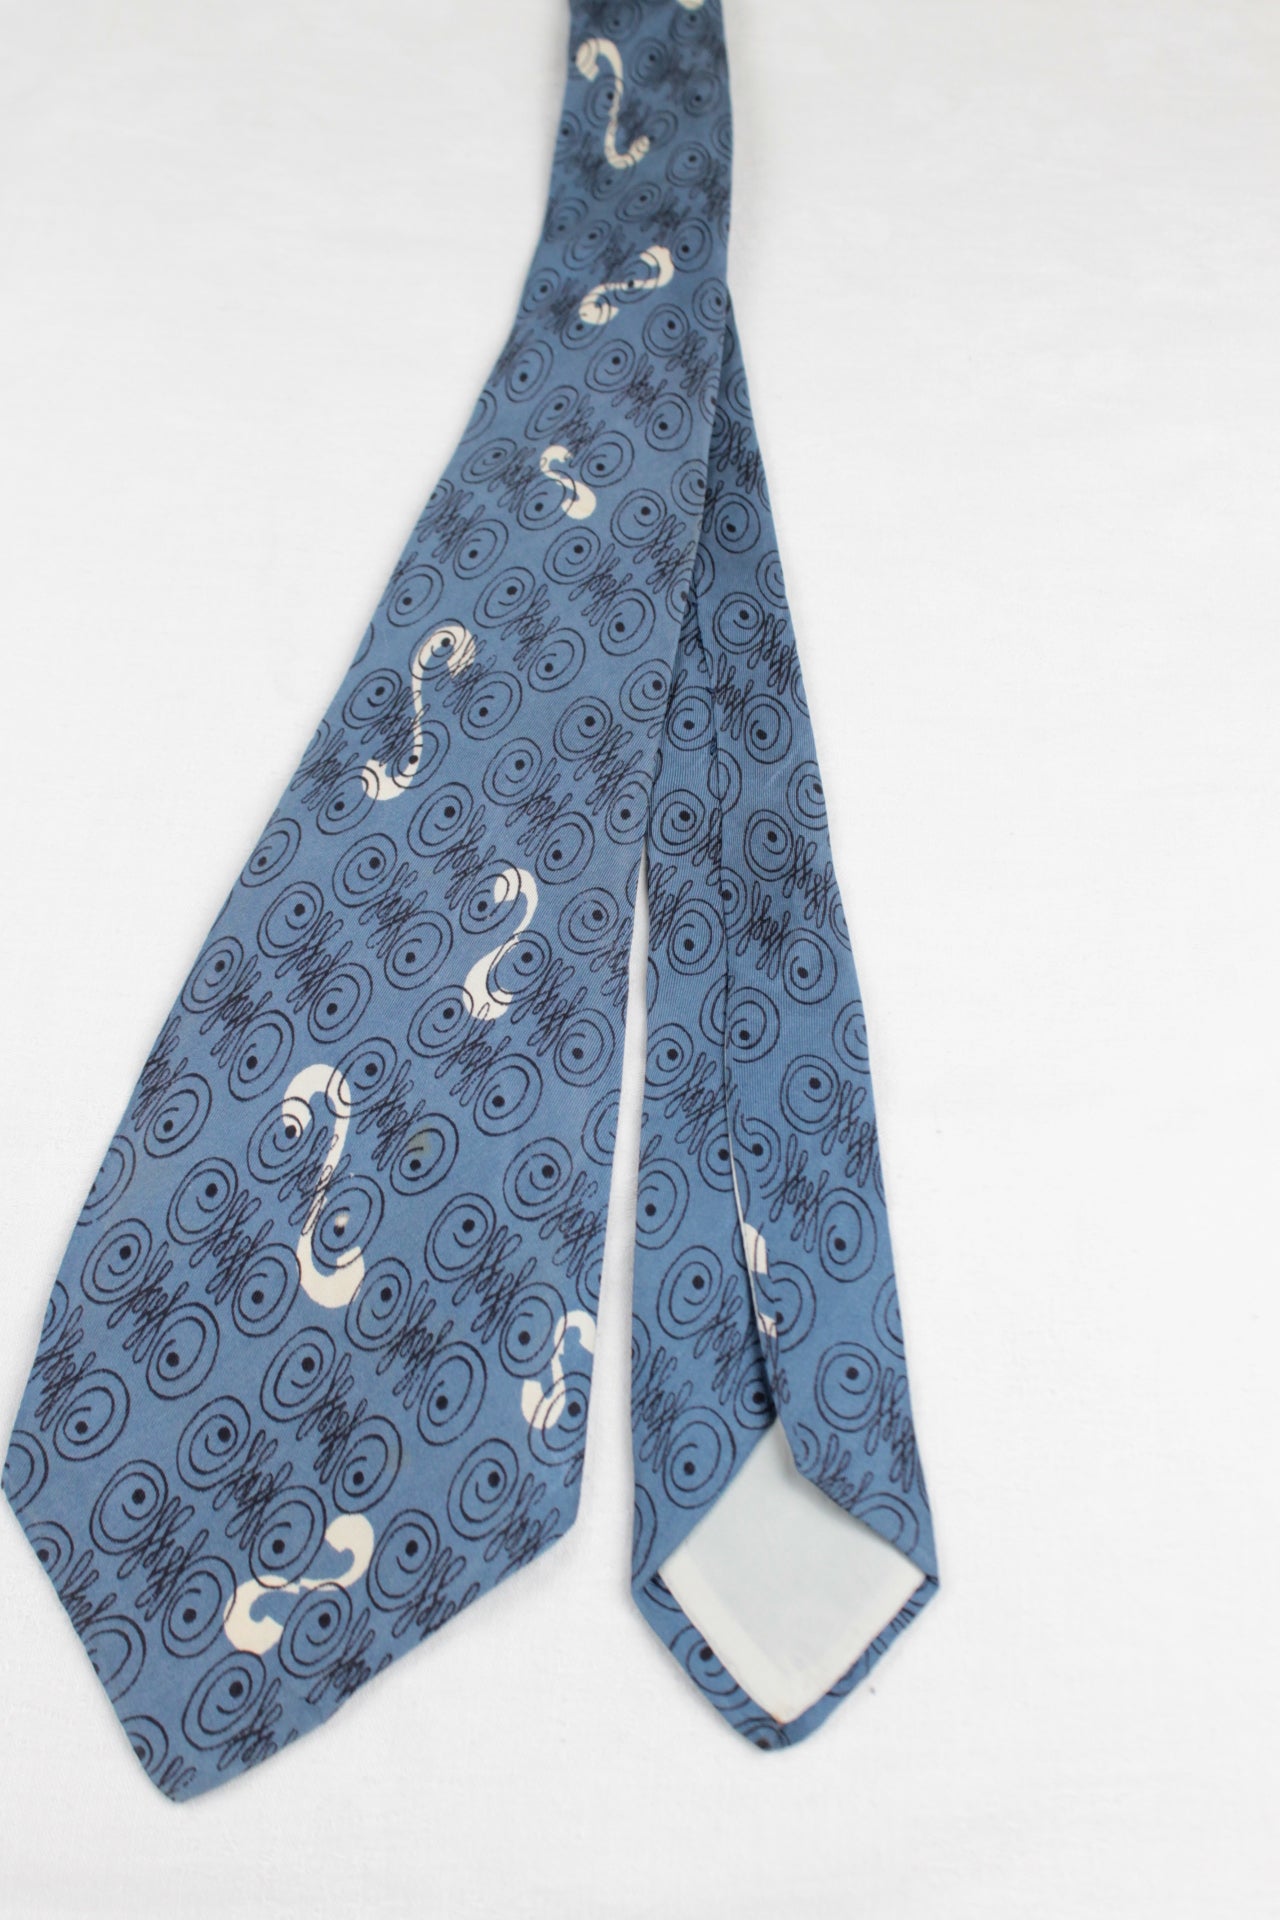 Vintage Blue White swirly reoccurring Pattern Swing Tie 1940s/50s